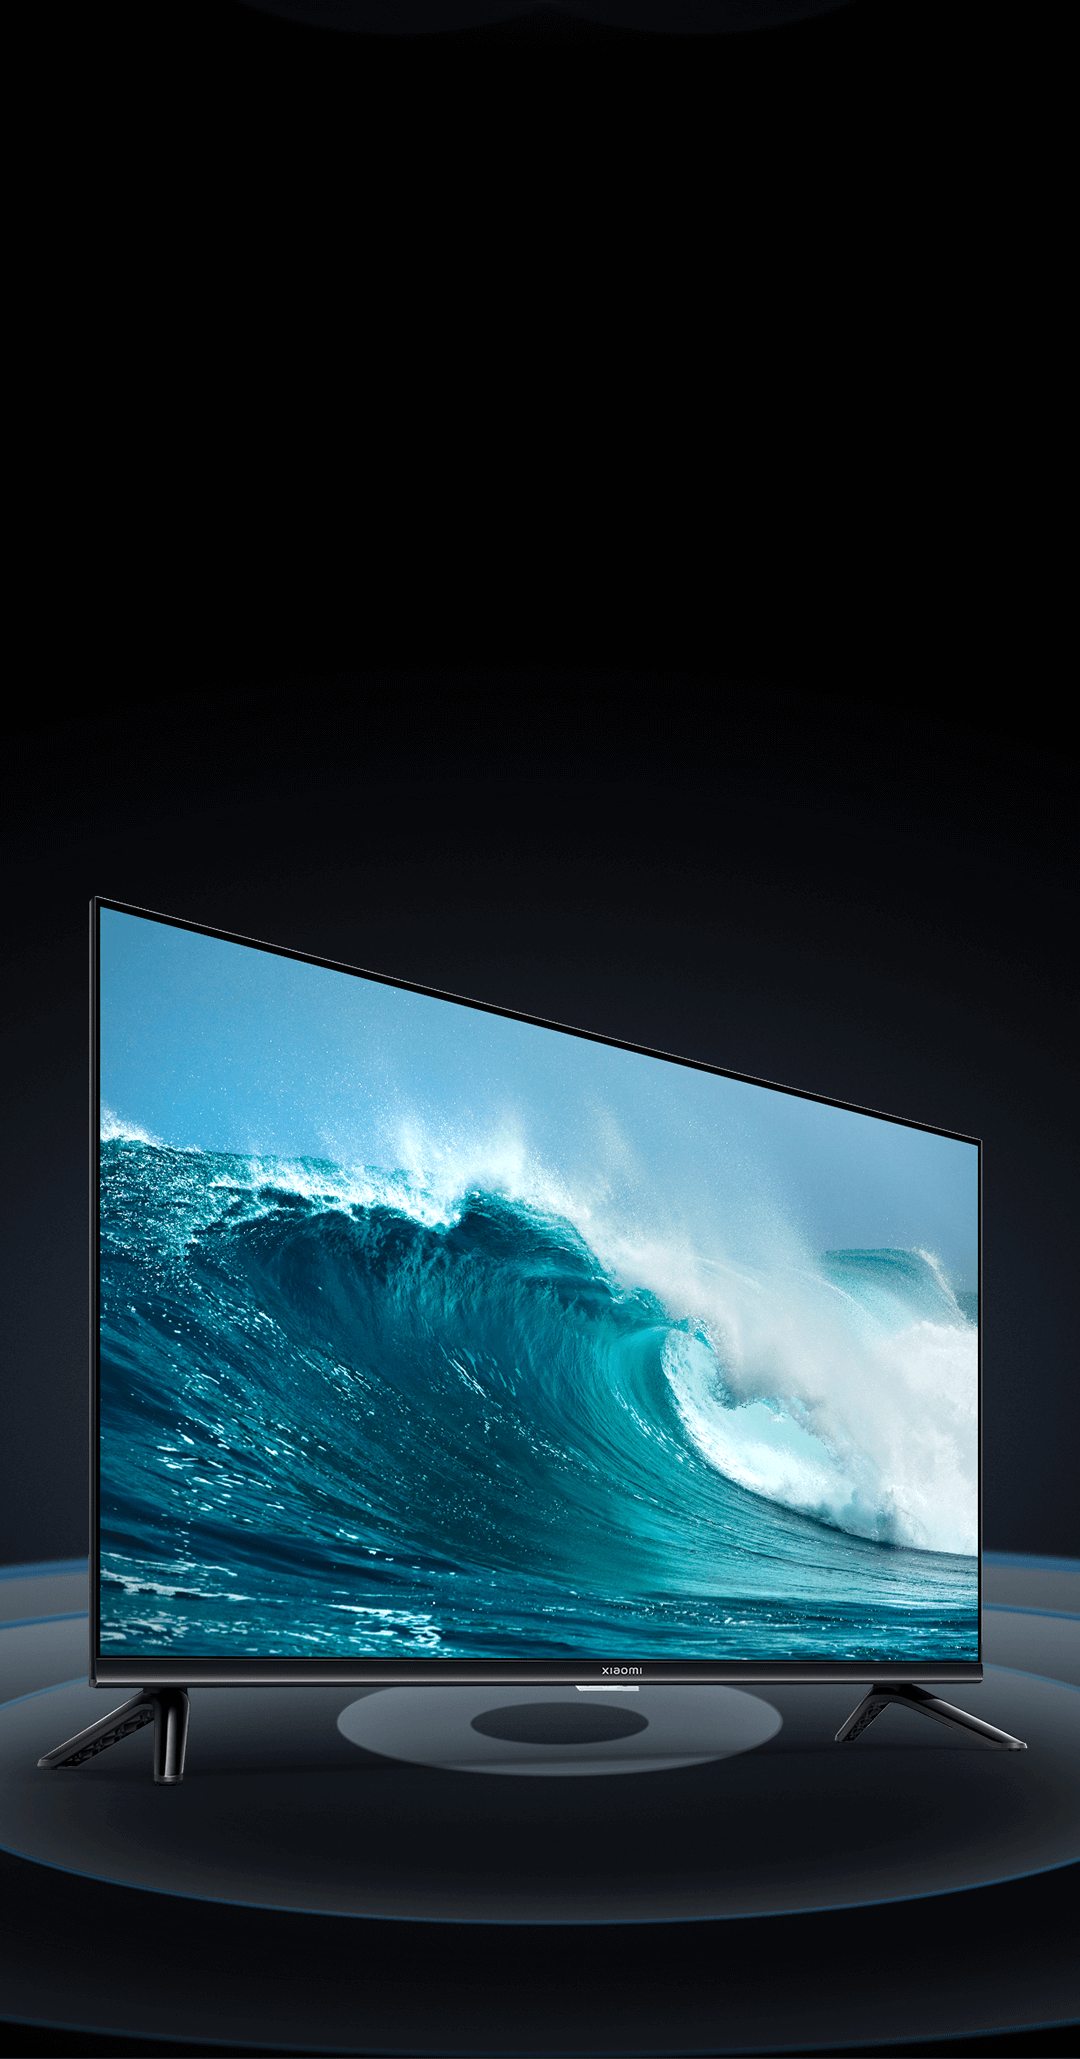 Xiaomi TV A2 50